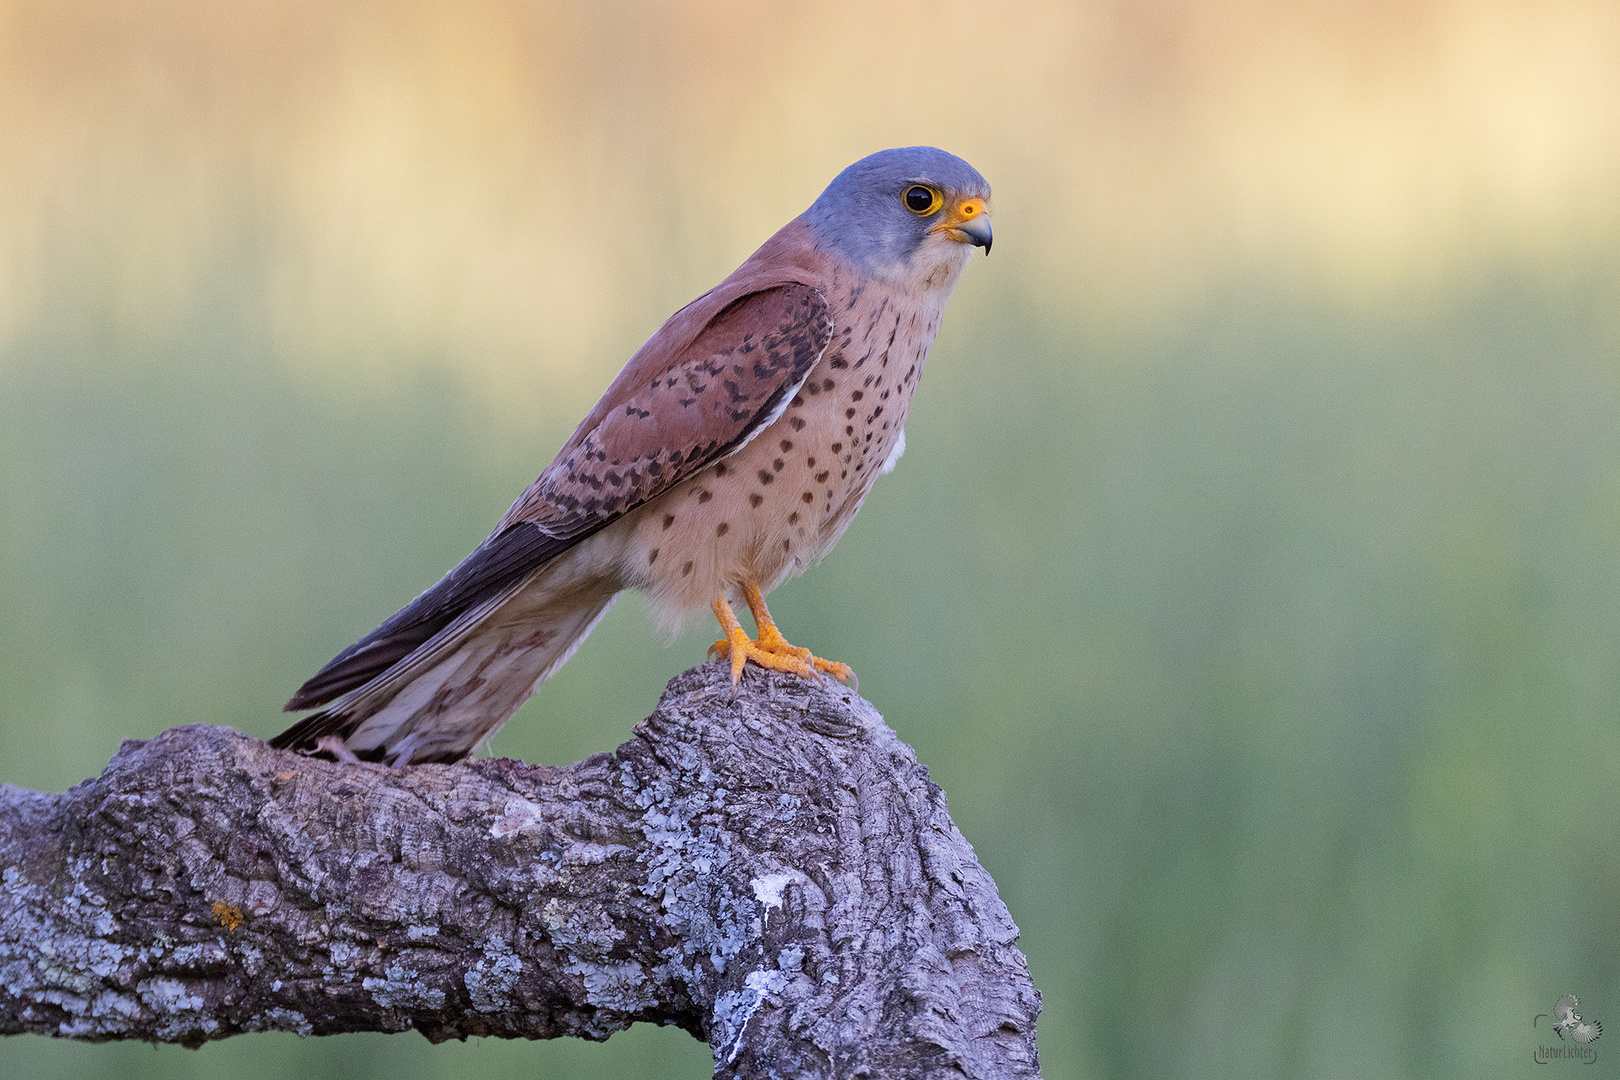 Lesser kestrel (Falco naumanni), Rötelfalke, Extremadura, Spanien